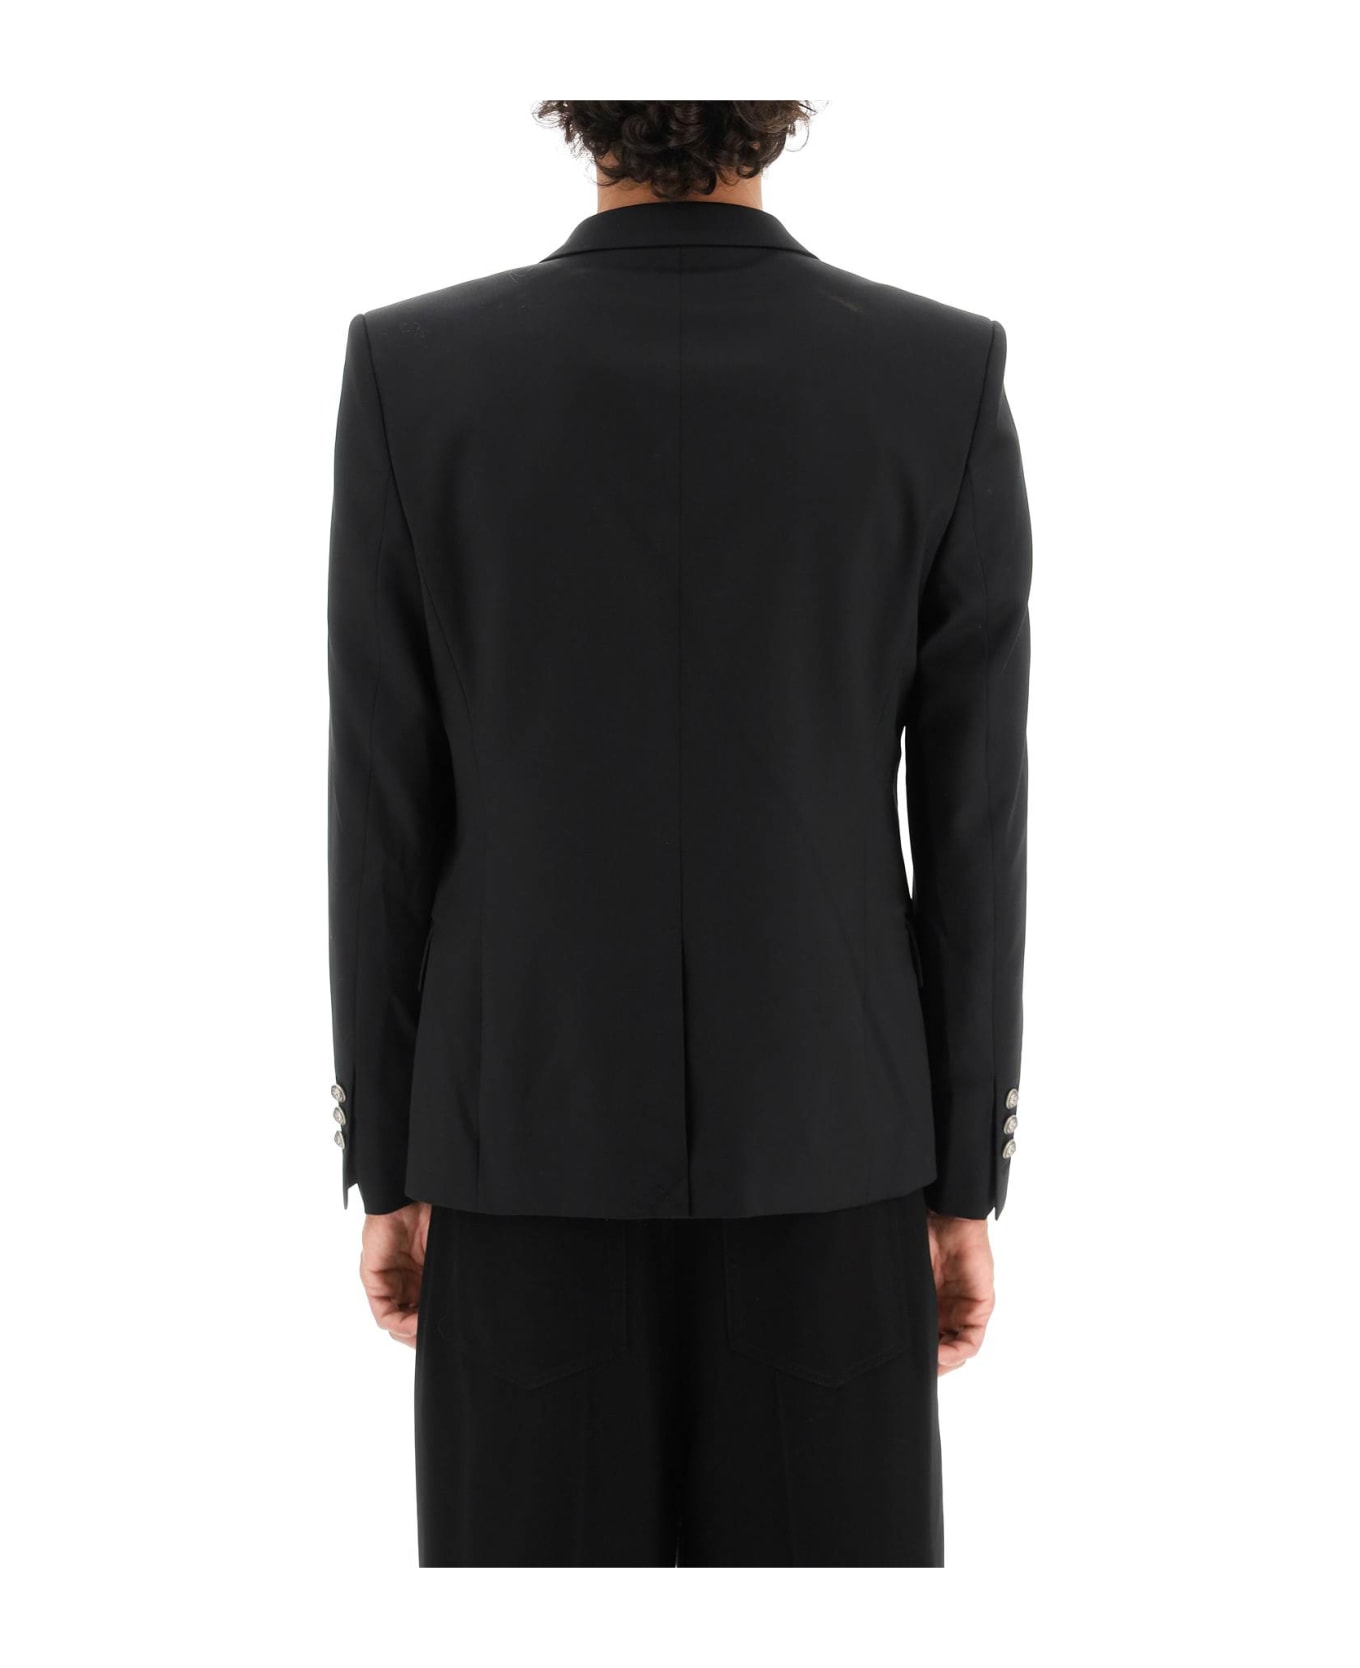 Balmain Wool Blazer With Decorative Buttons - NOIR (Black) スーツ